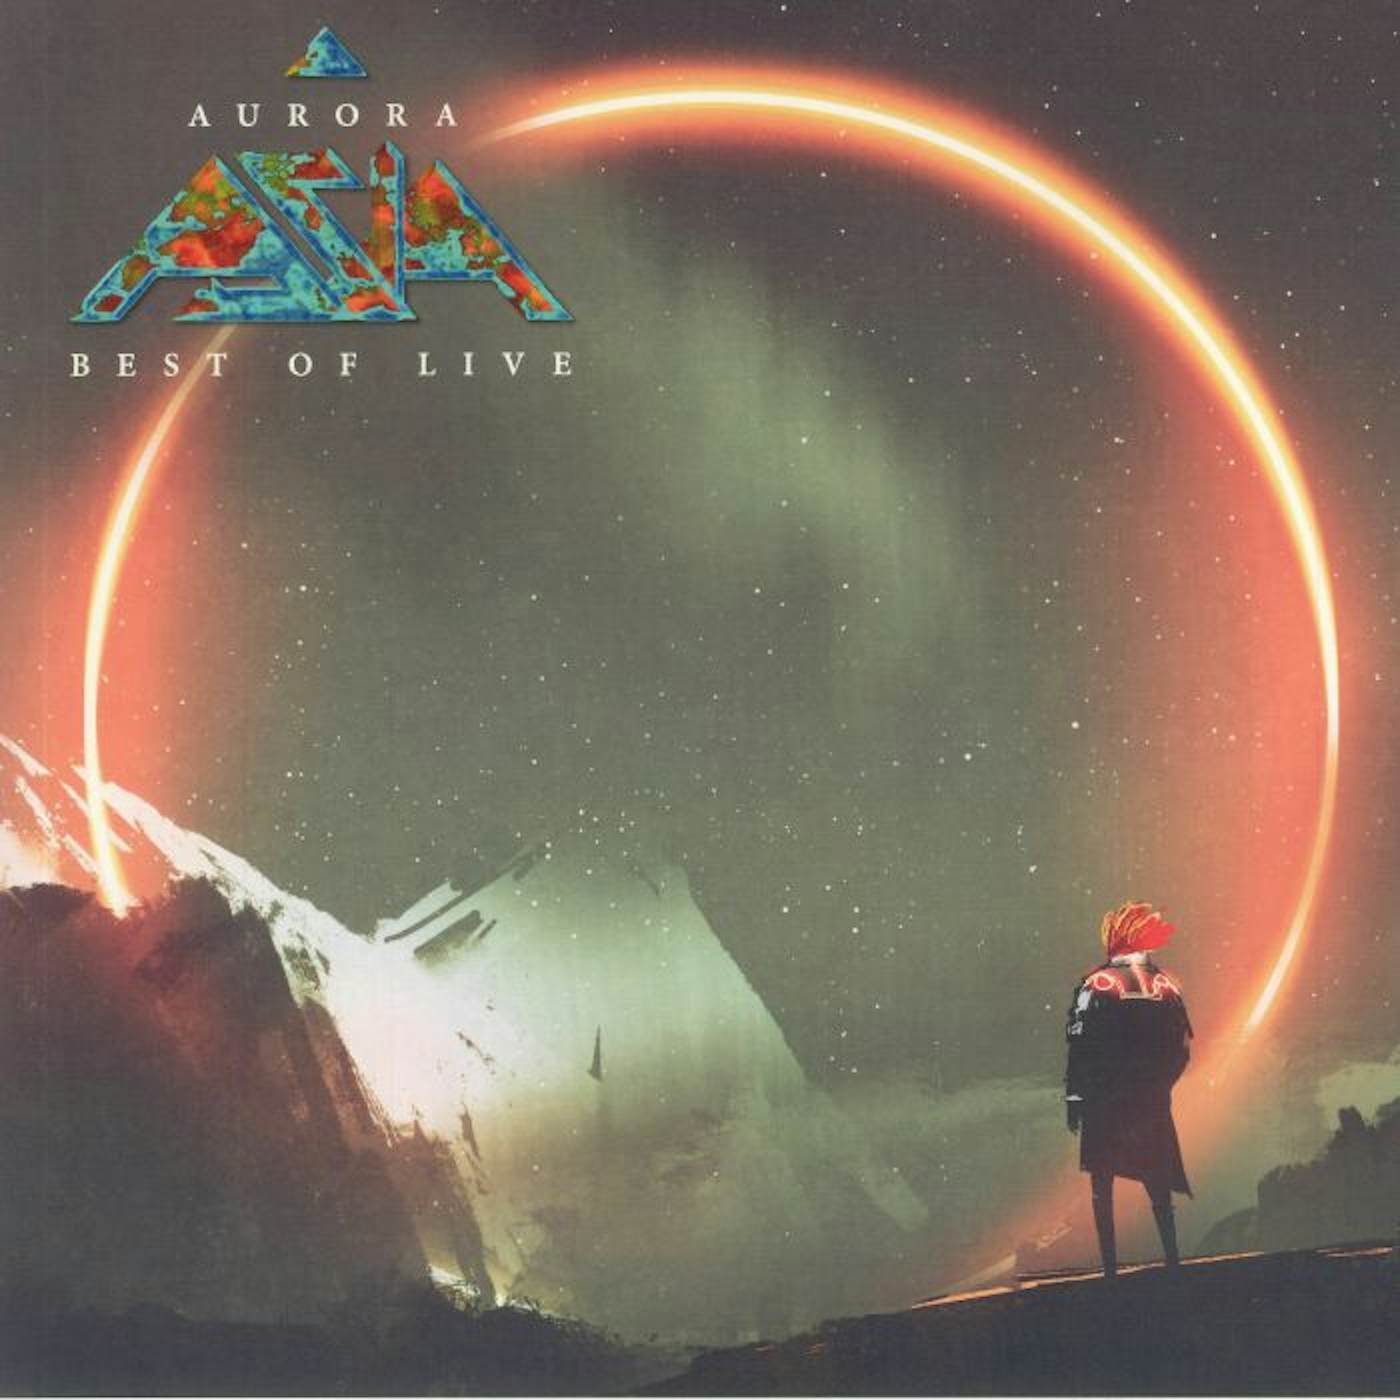 Asia LP Vinyl Record - Aurora Best Of Live